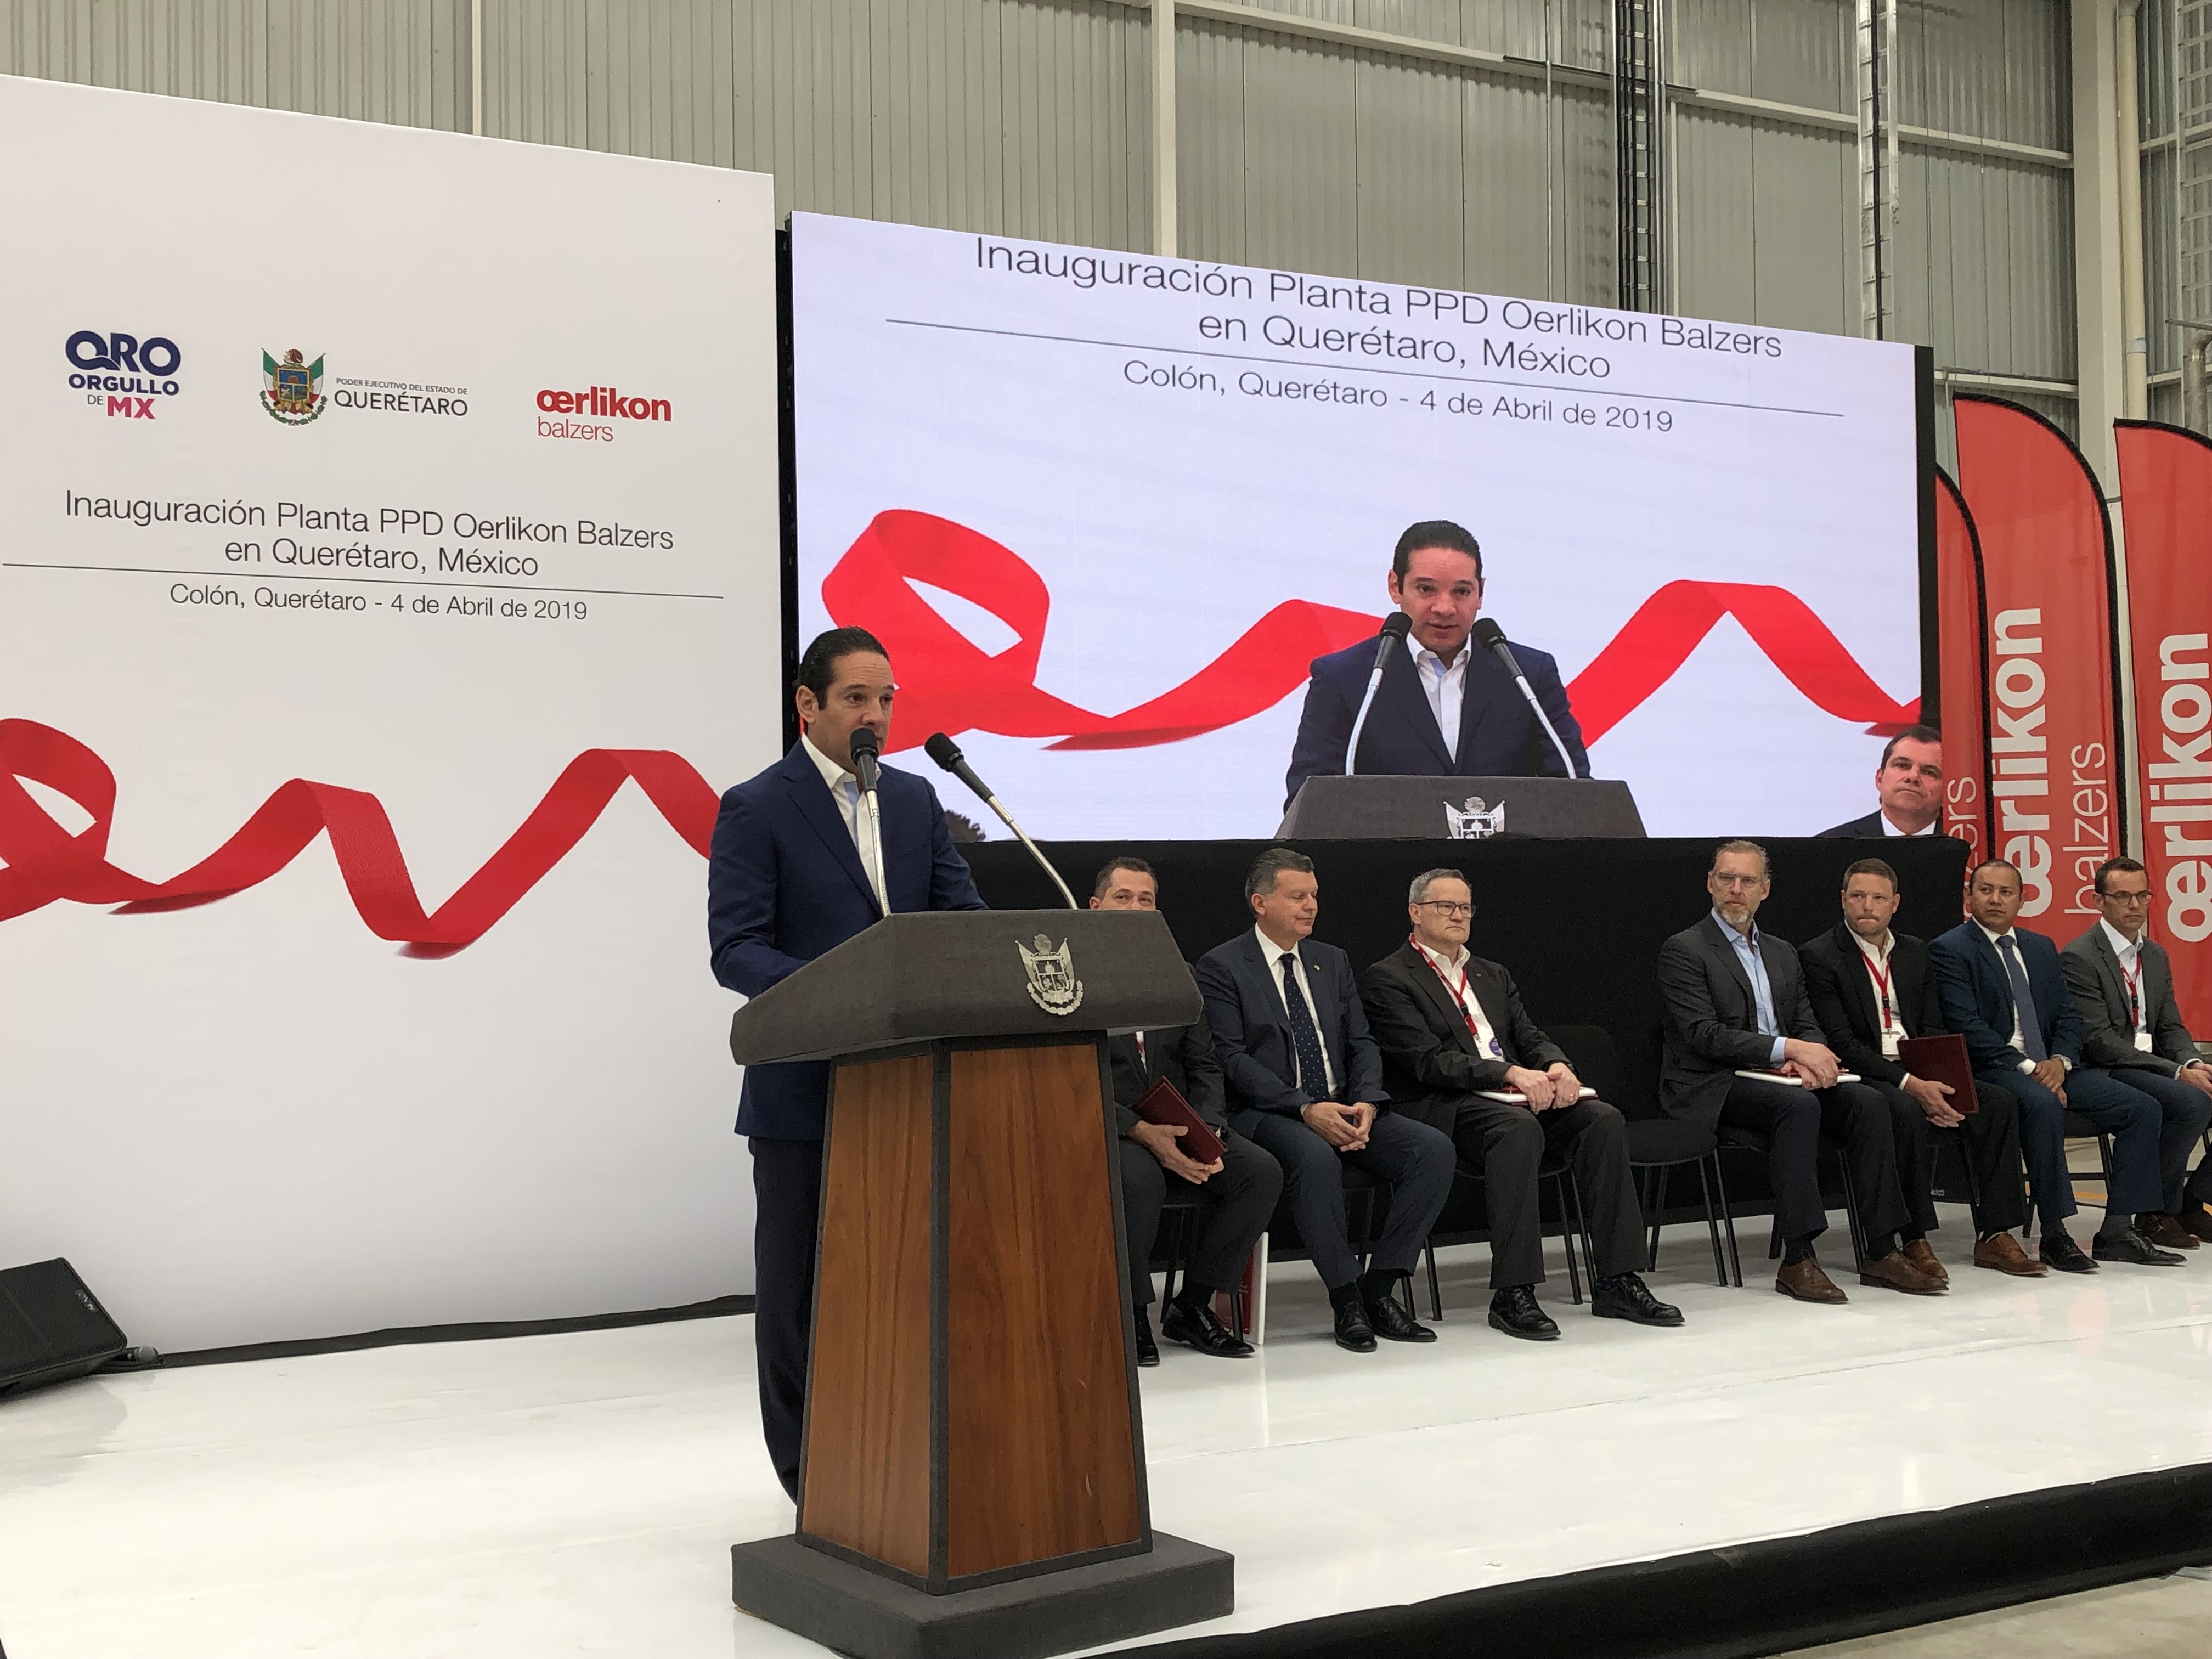  Inaugura Pancho Domínguez planta PPD Oerlikon Balzers en Colón